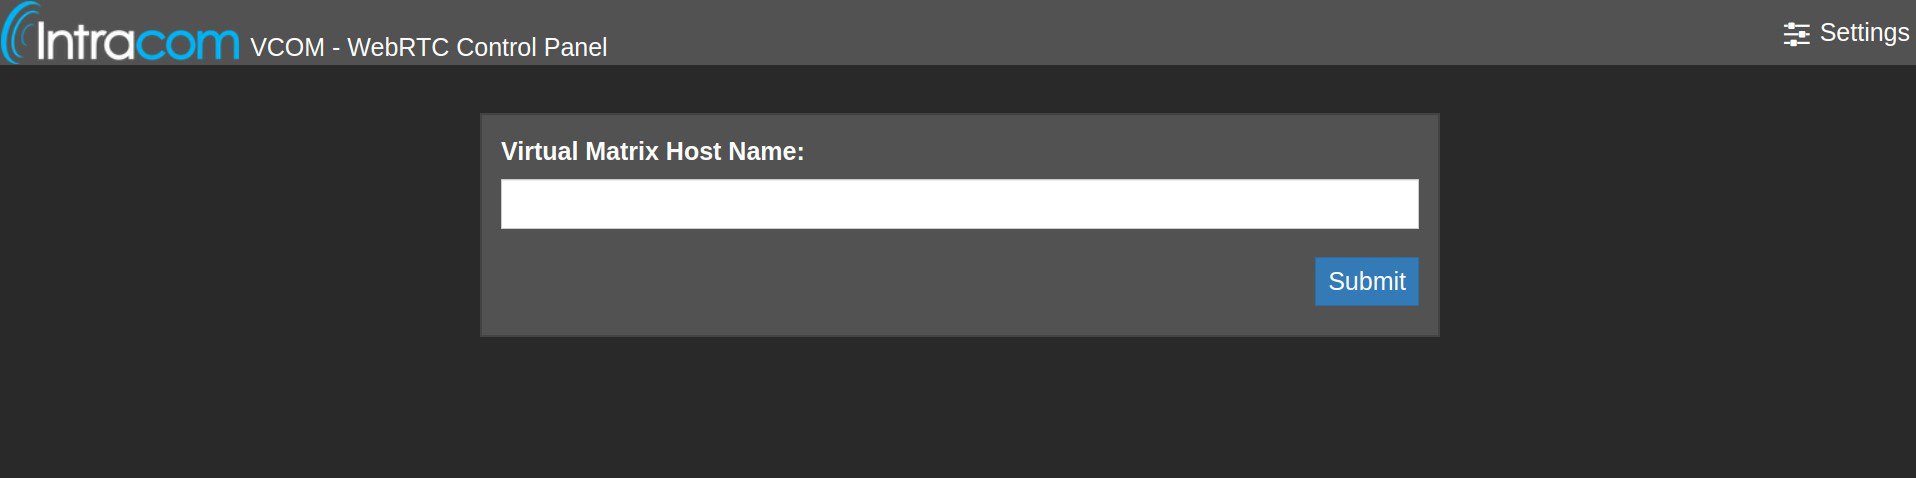 screenshot of vcom virtual matrix host name menu